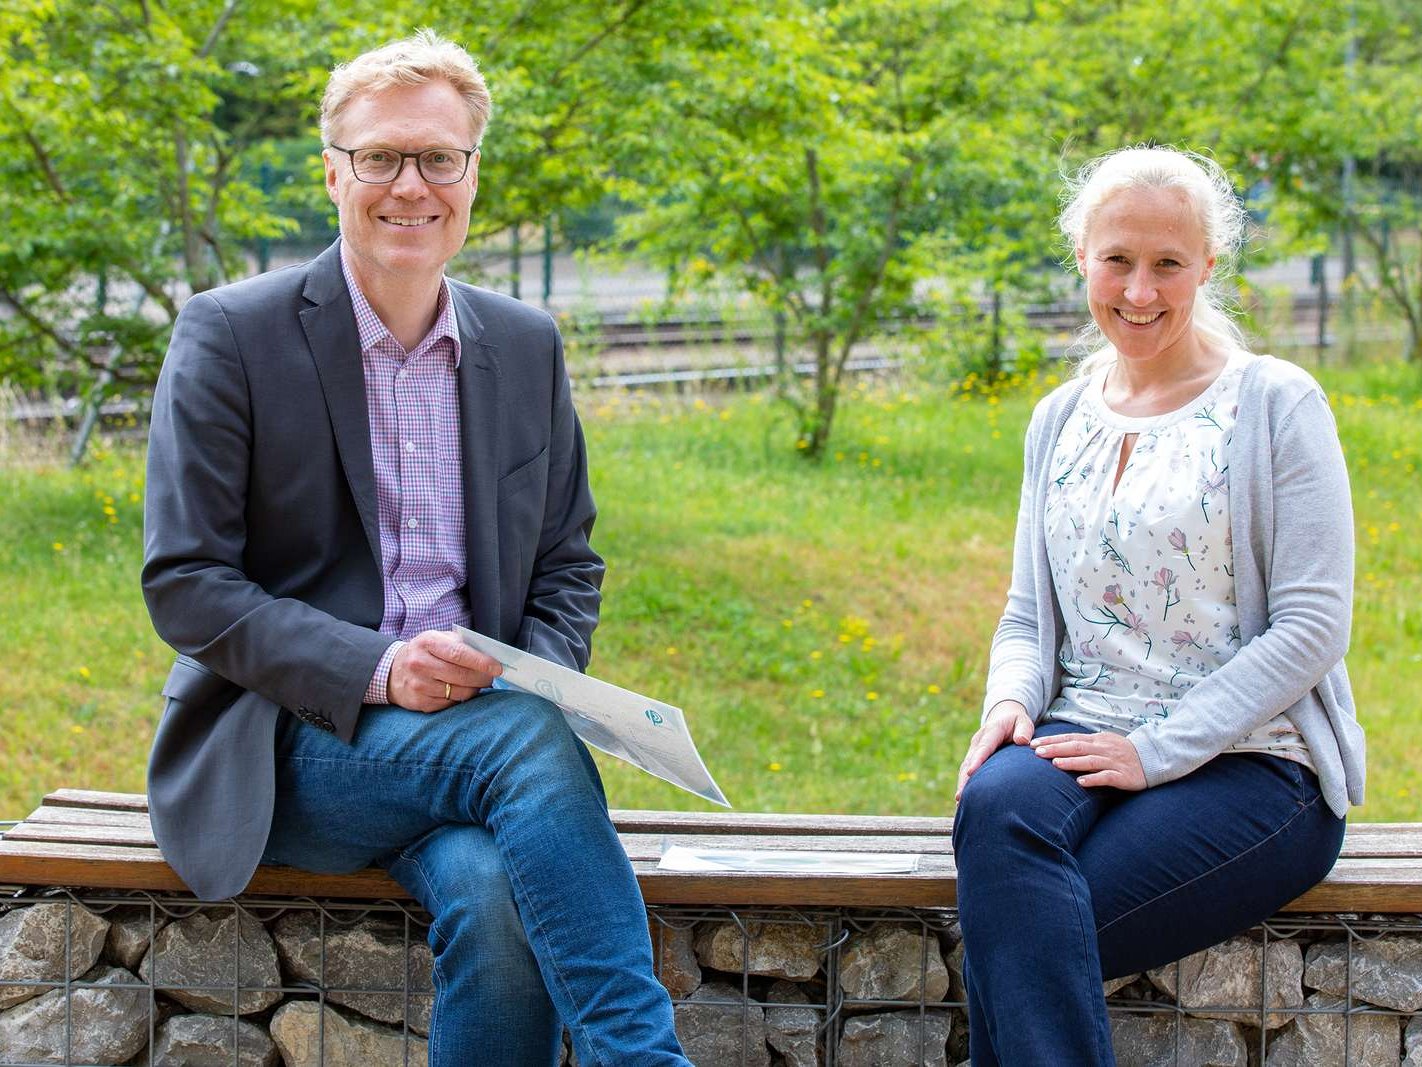 Professor Dr Stephanie Stiel and Professor Dr Nils Schneider sitting next to each other on a park bench